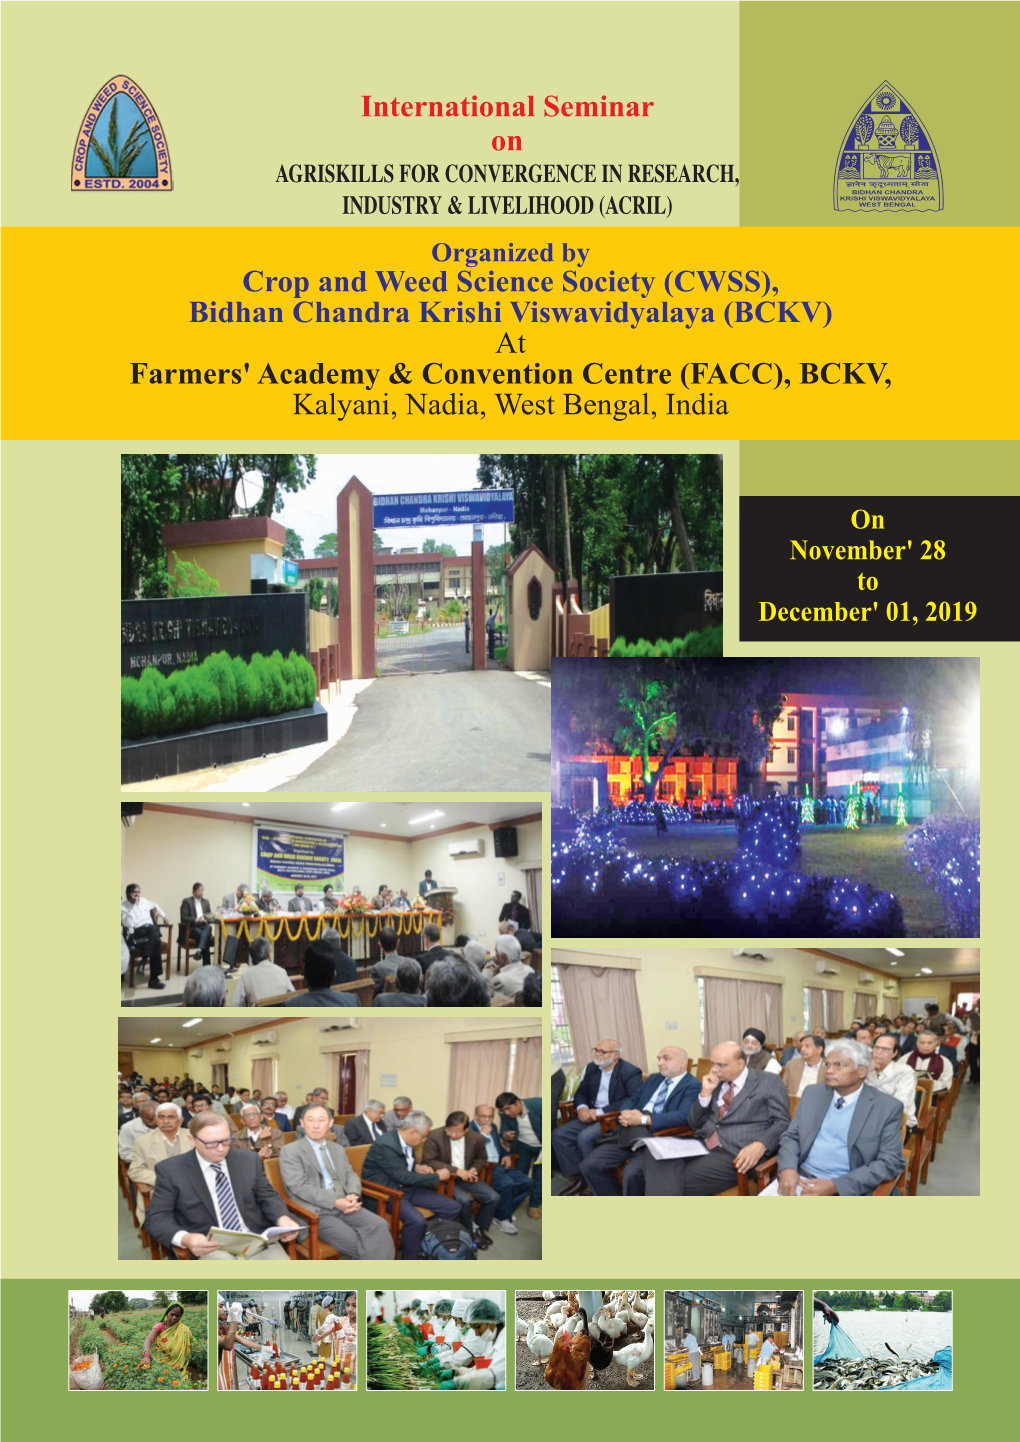 (CWSS), Bidhan Chandra Krishi Viswavidyalaya (BCKV) at Farmers' Academy & Convention Centre (FACC), BCKV, Kalyani, Nadia, West Bengal, India